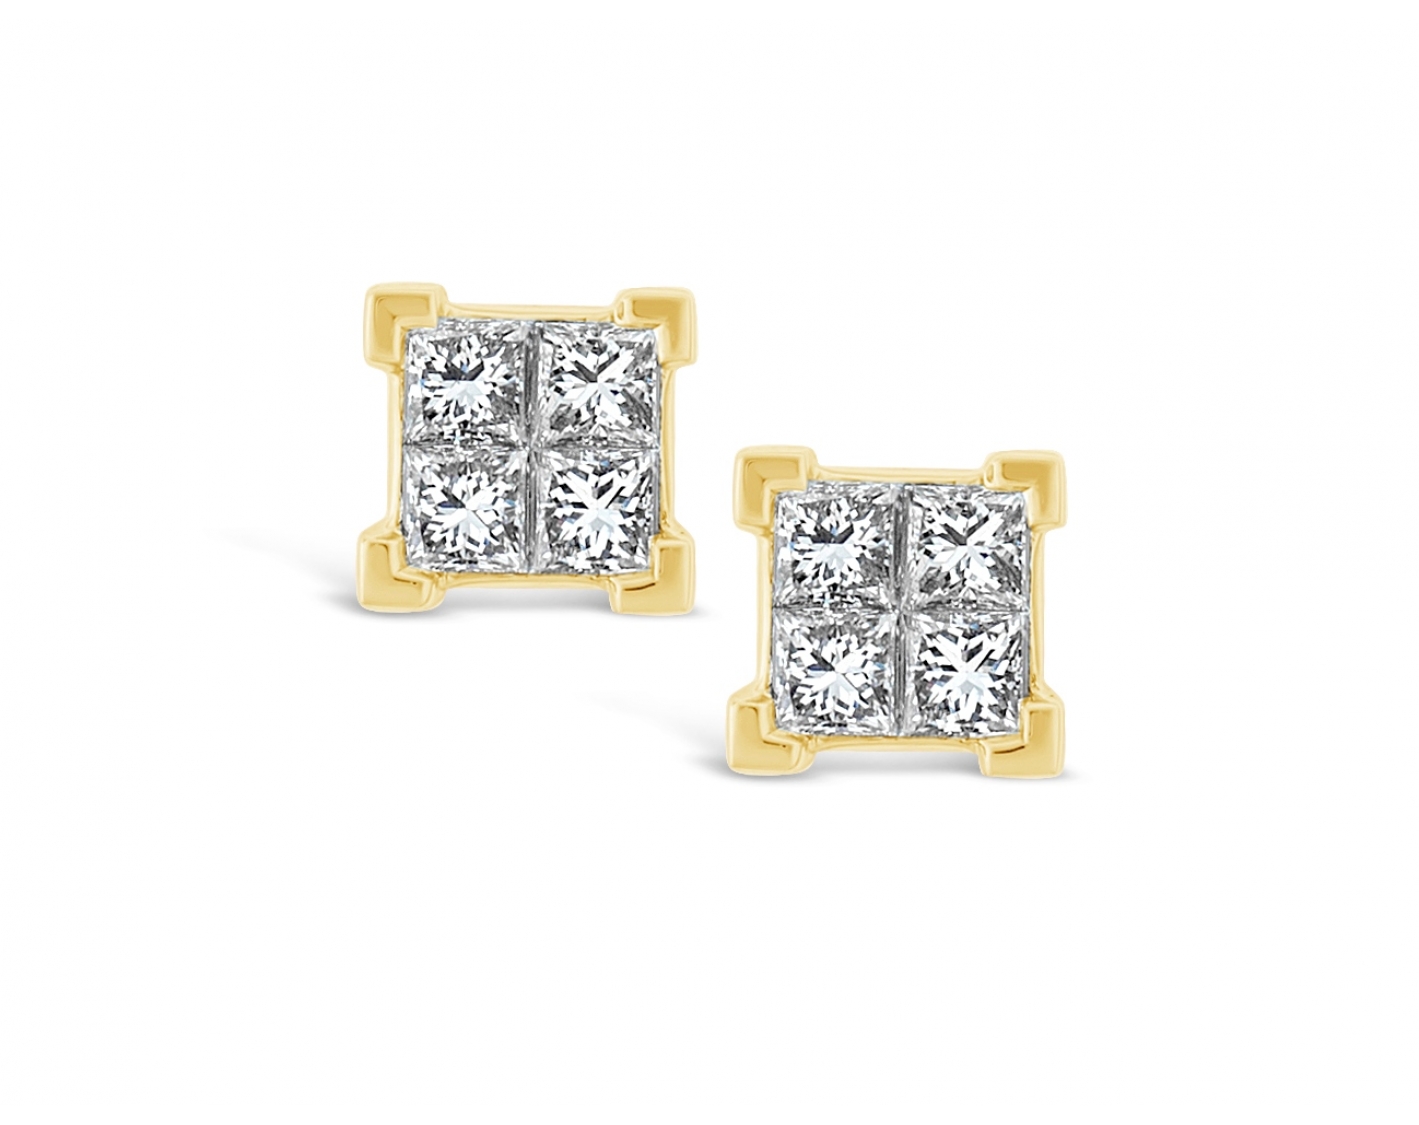 18k yellow gold princess cut invisible set diamond earrings